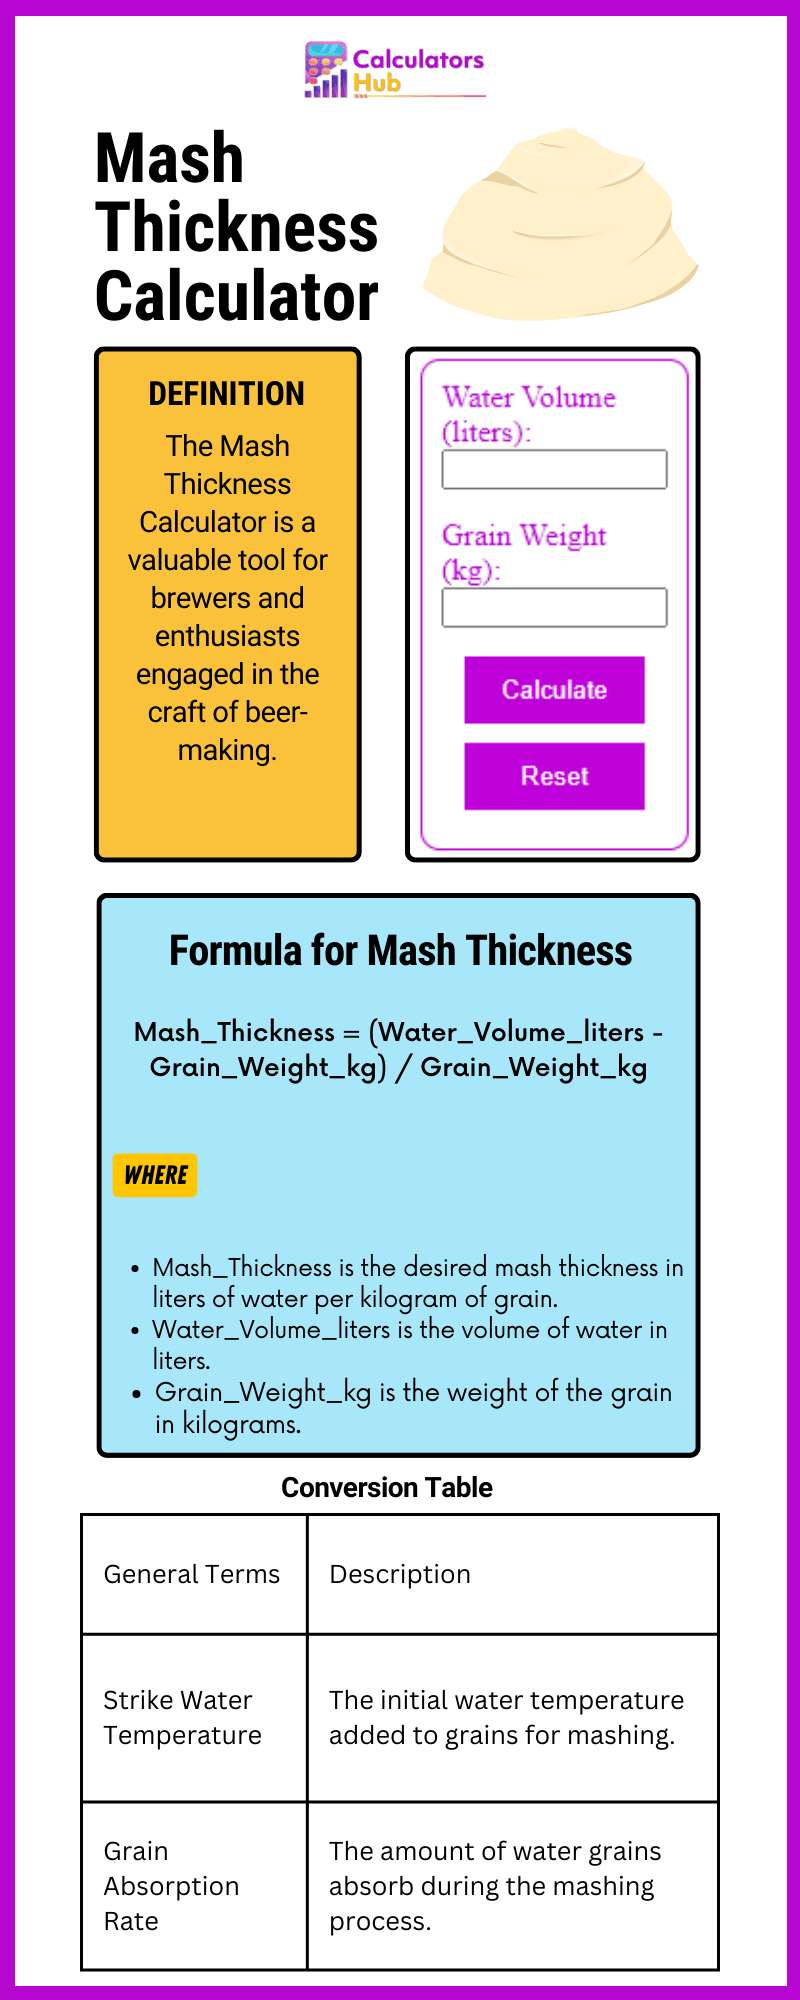 Mash Thickness Calculator